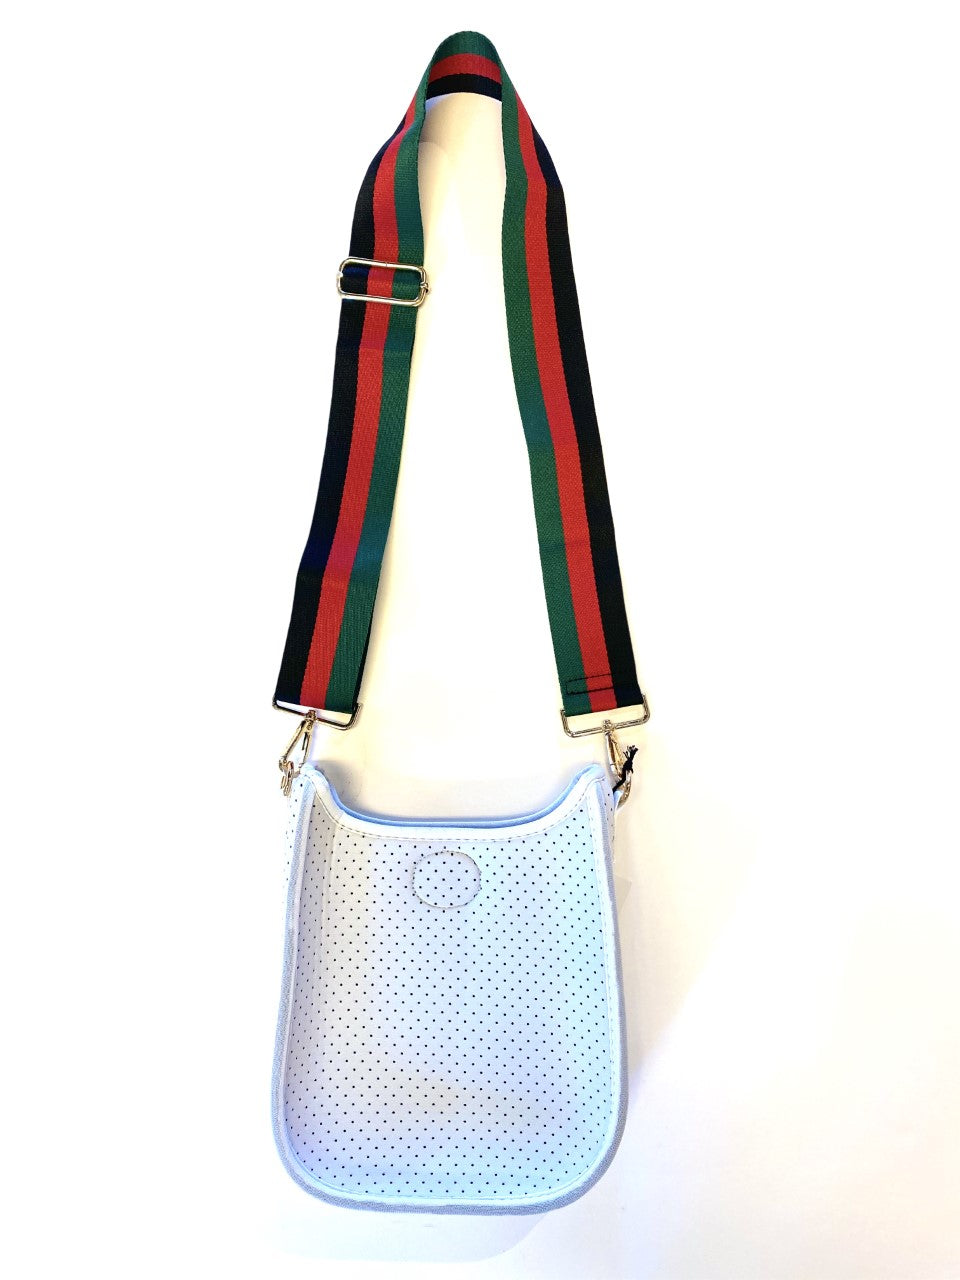 Stripe Adjustable Strap in black/red/green by Ah-Dorned